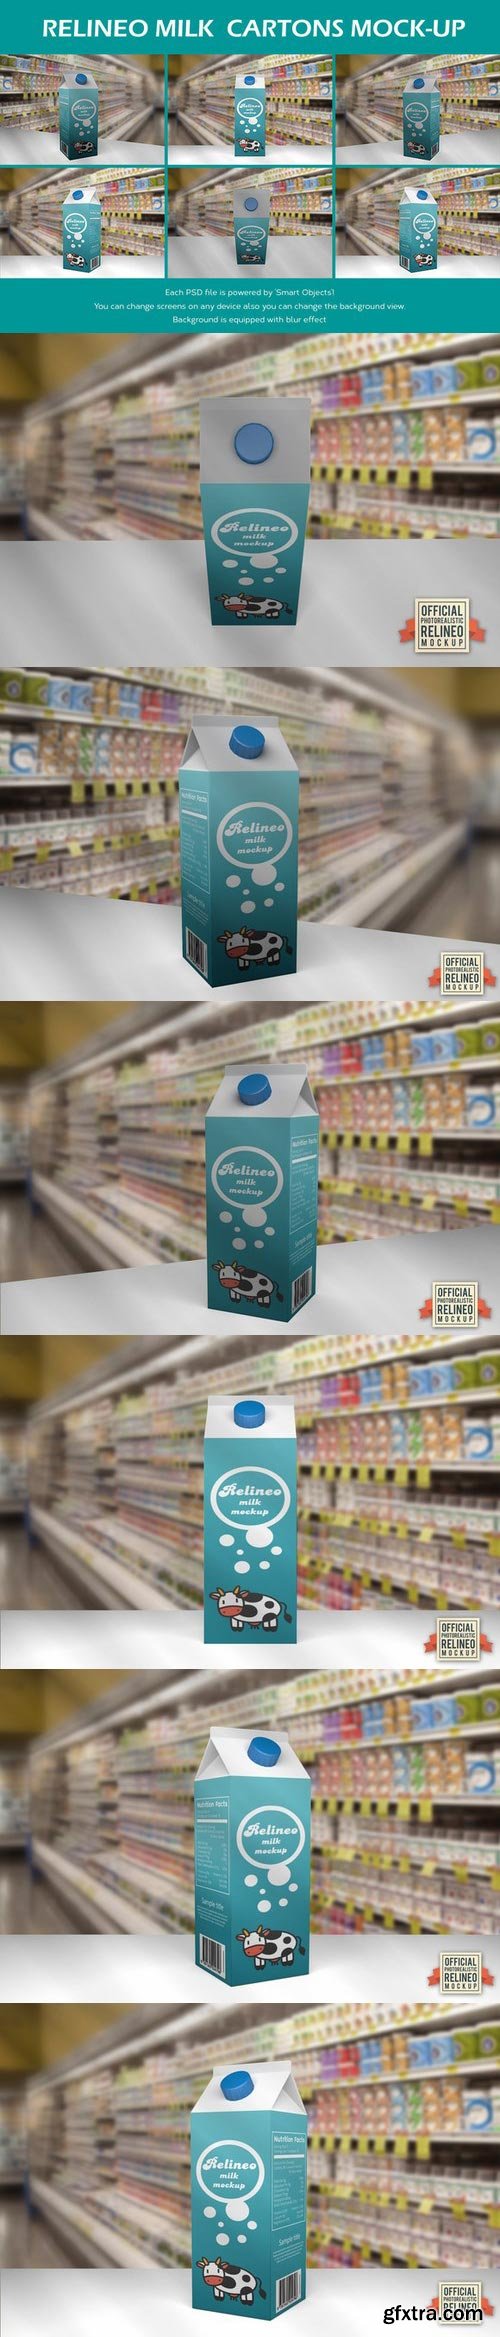 CM - Relineo Milk Cartons Mock-up 459106